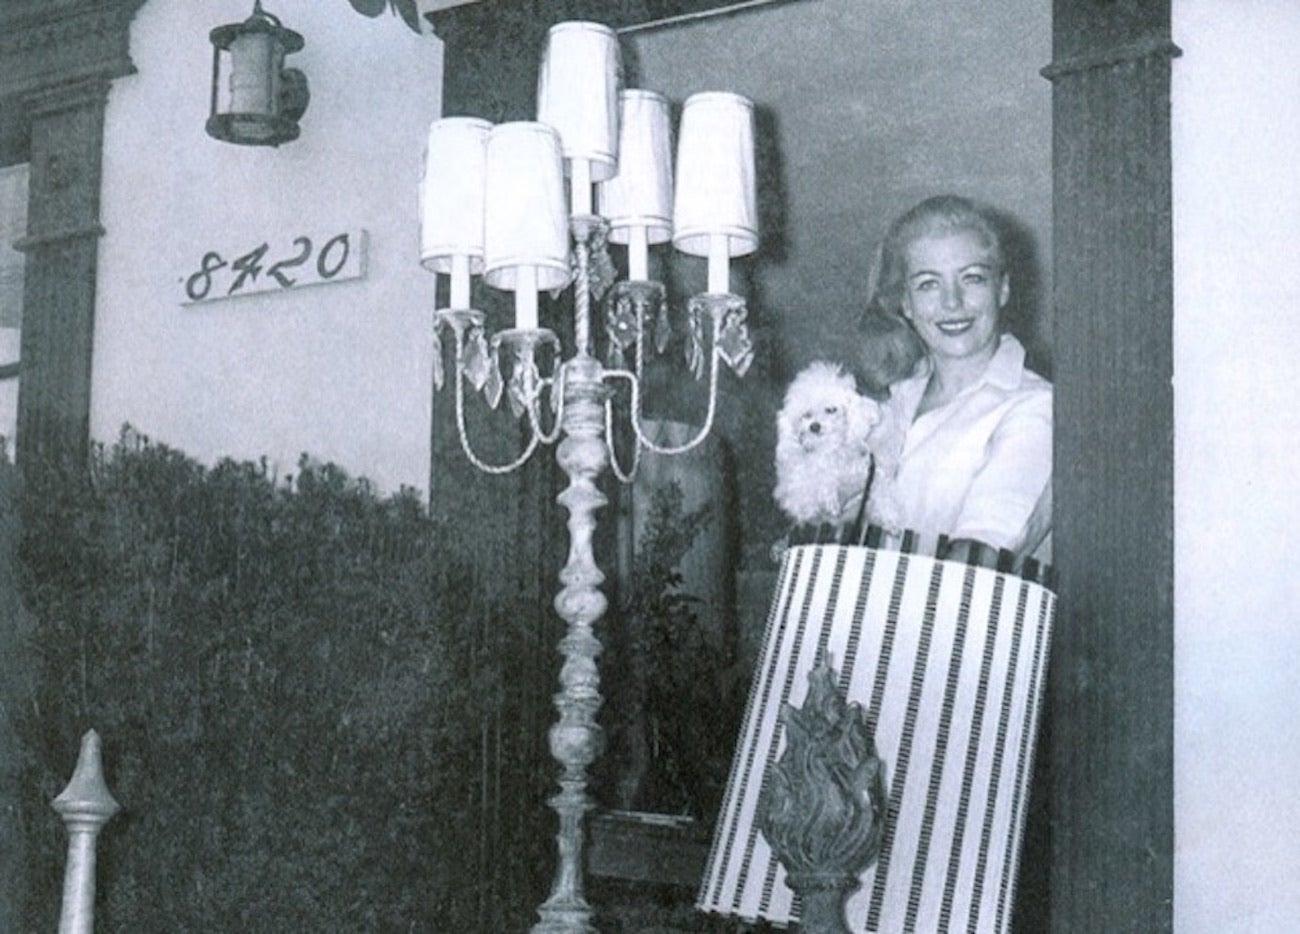 American Phyllis Morris Original Poodle Table Lamp, Signed, Black, 1952 Vintage Lampshade